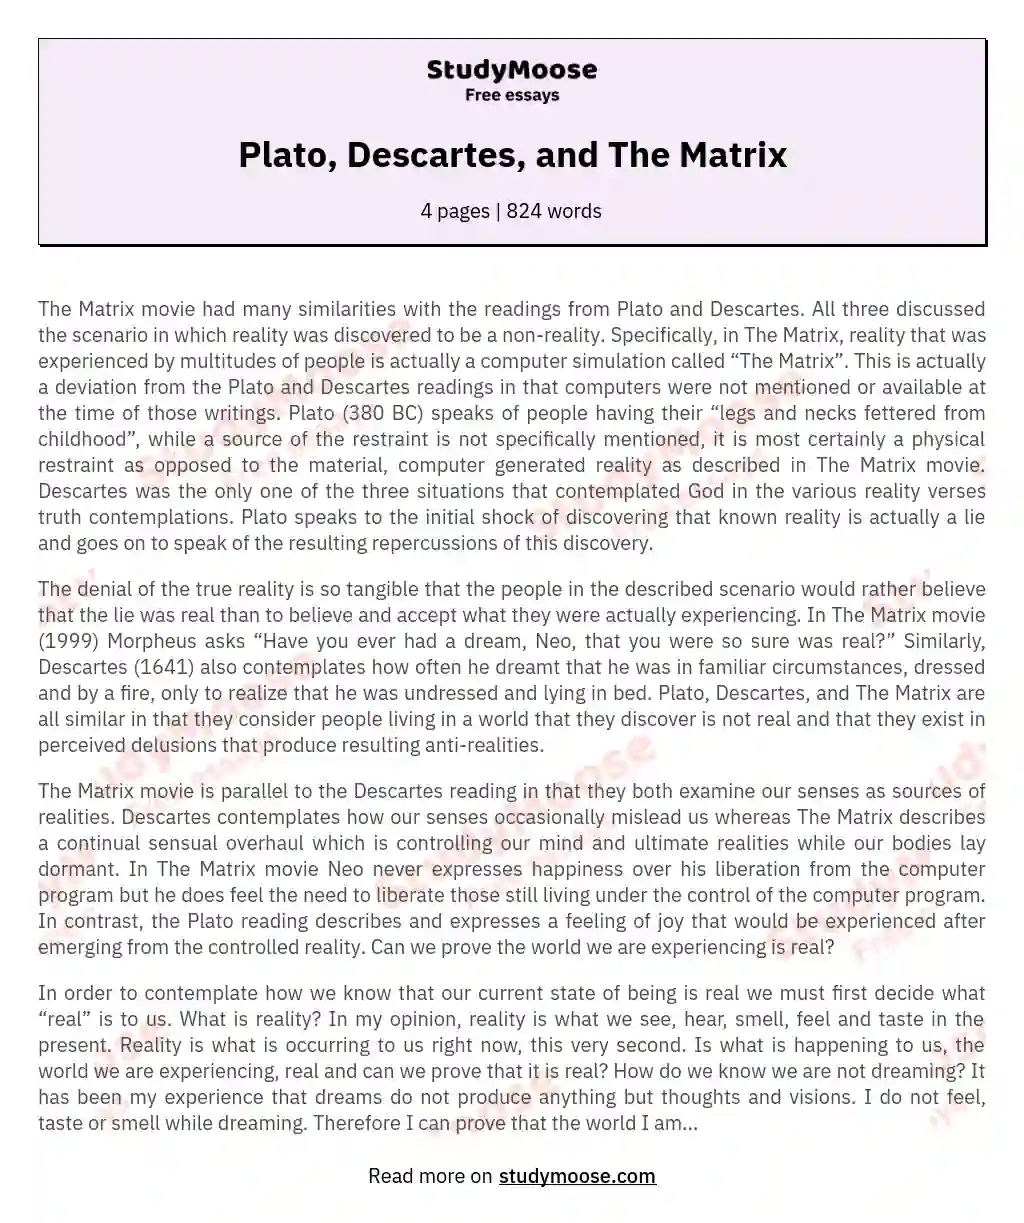 Plato, Descartes, and The Matrix essay